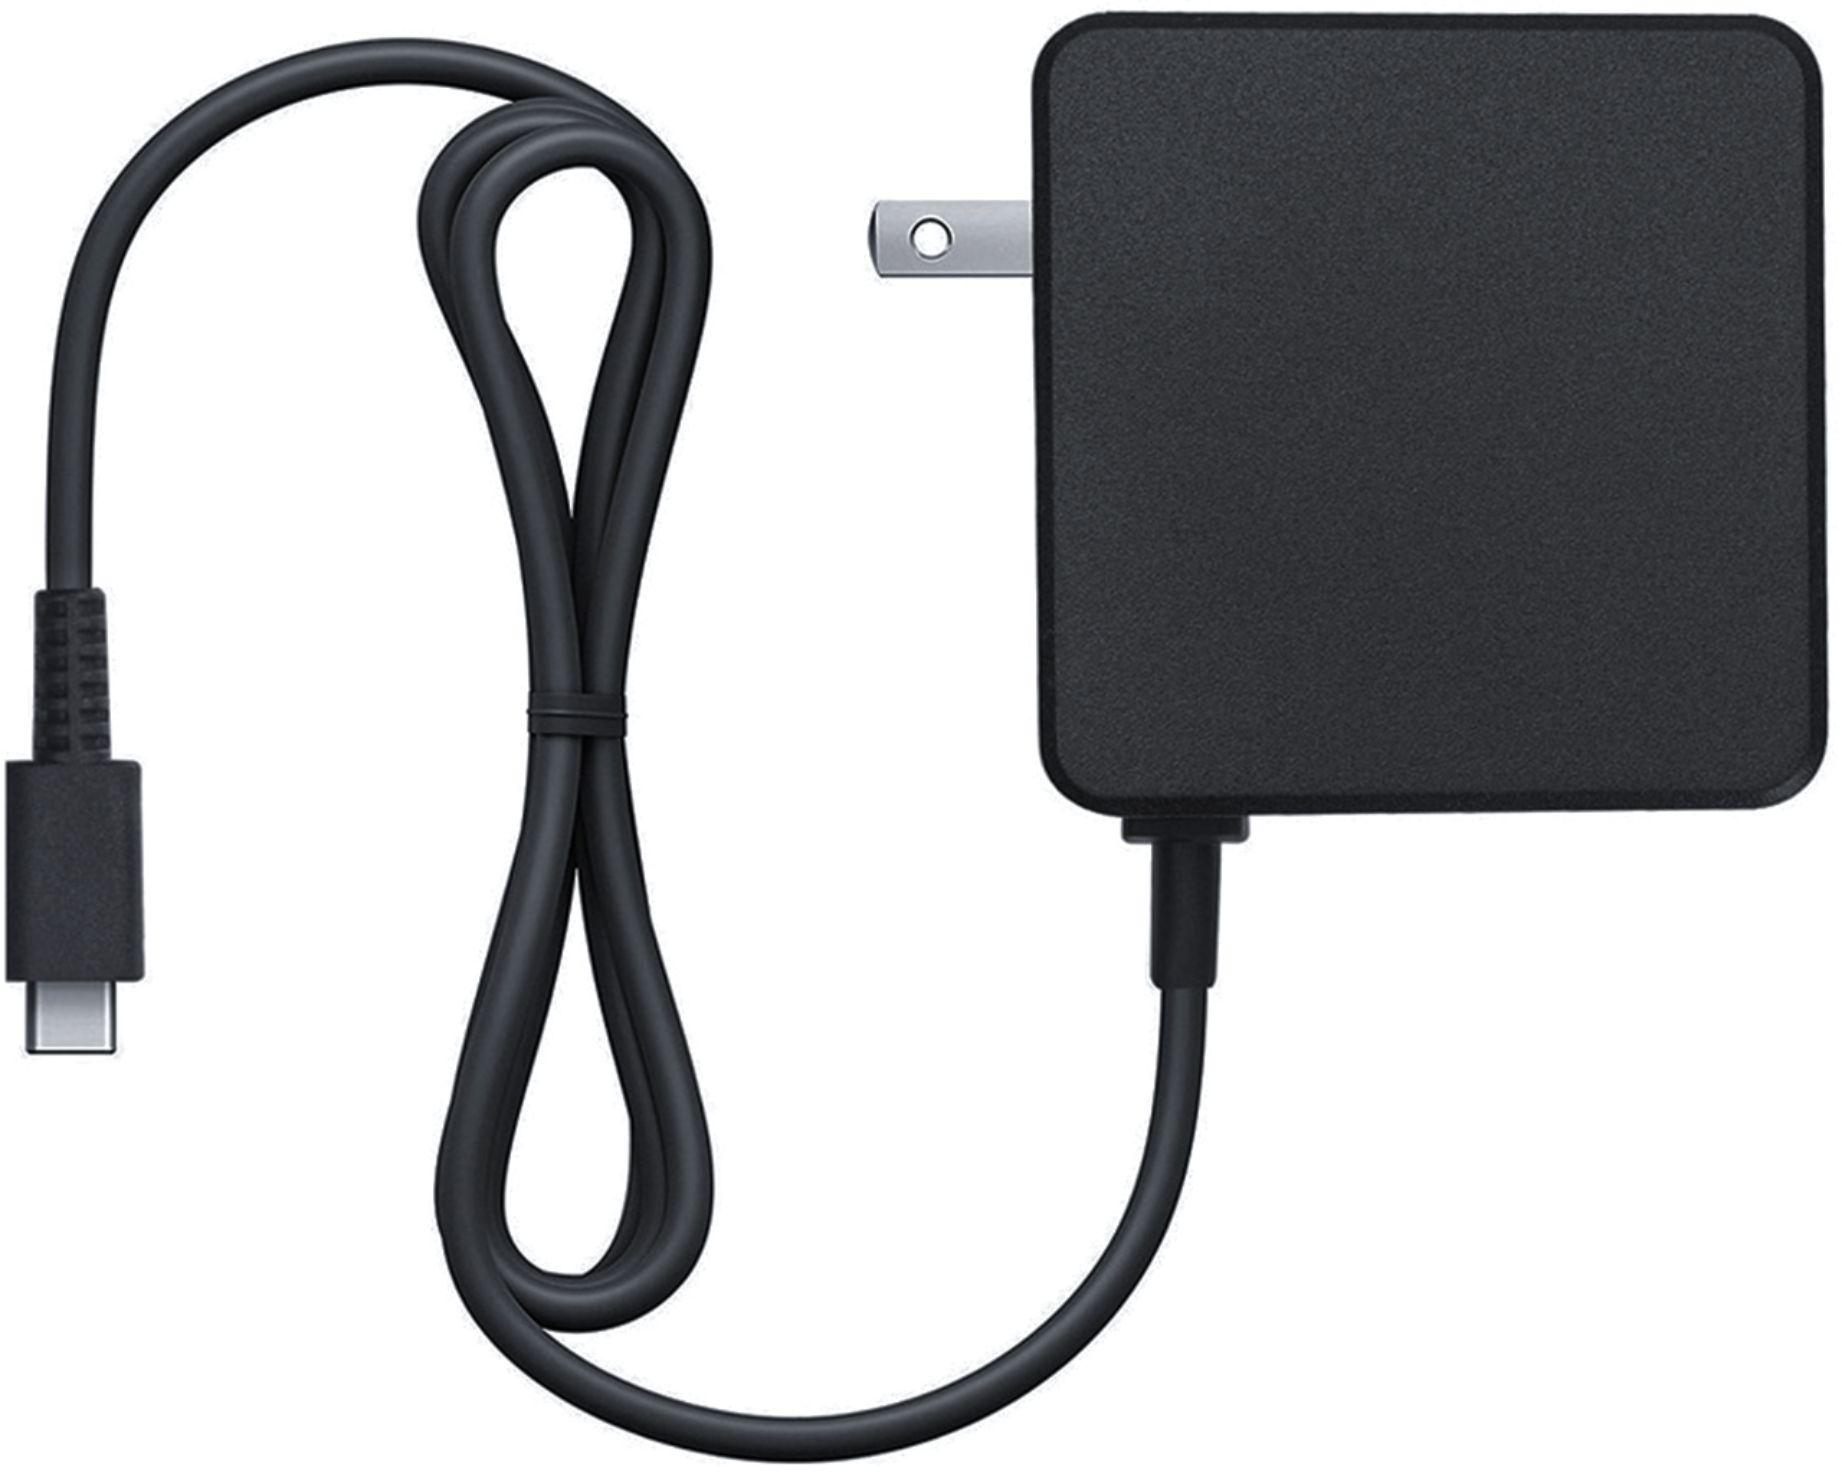 Verval grafiek ~ kant Rocketfish™ 39W USB-C AC Adapter For Nintendo Switch, Switch OLED & Switch  Lite Black RF-NSACCRGL - Best Buy